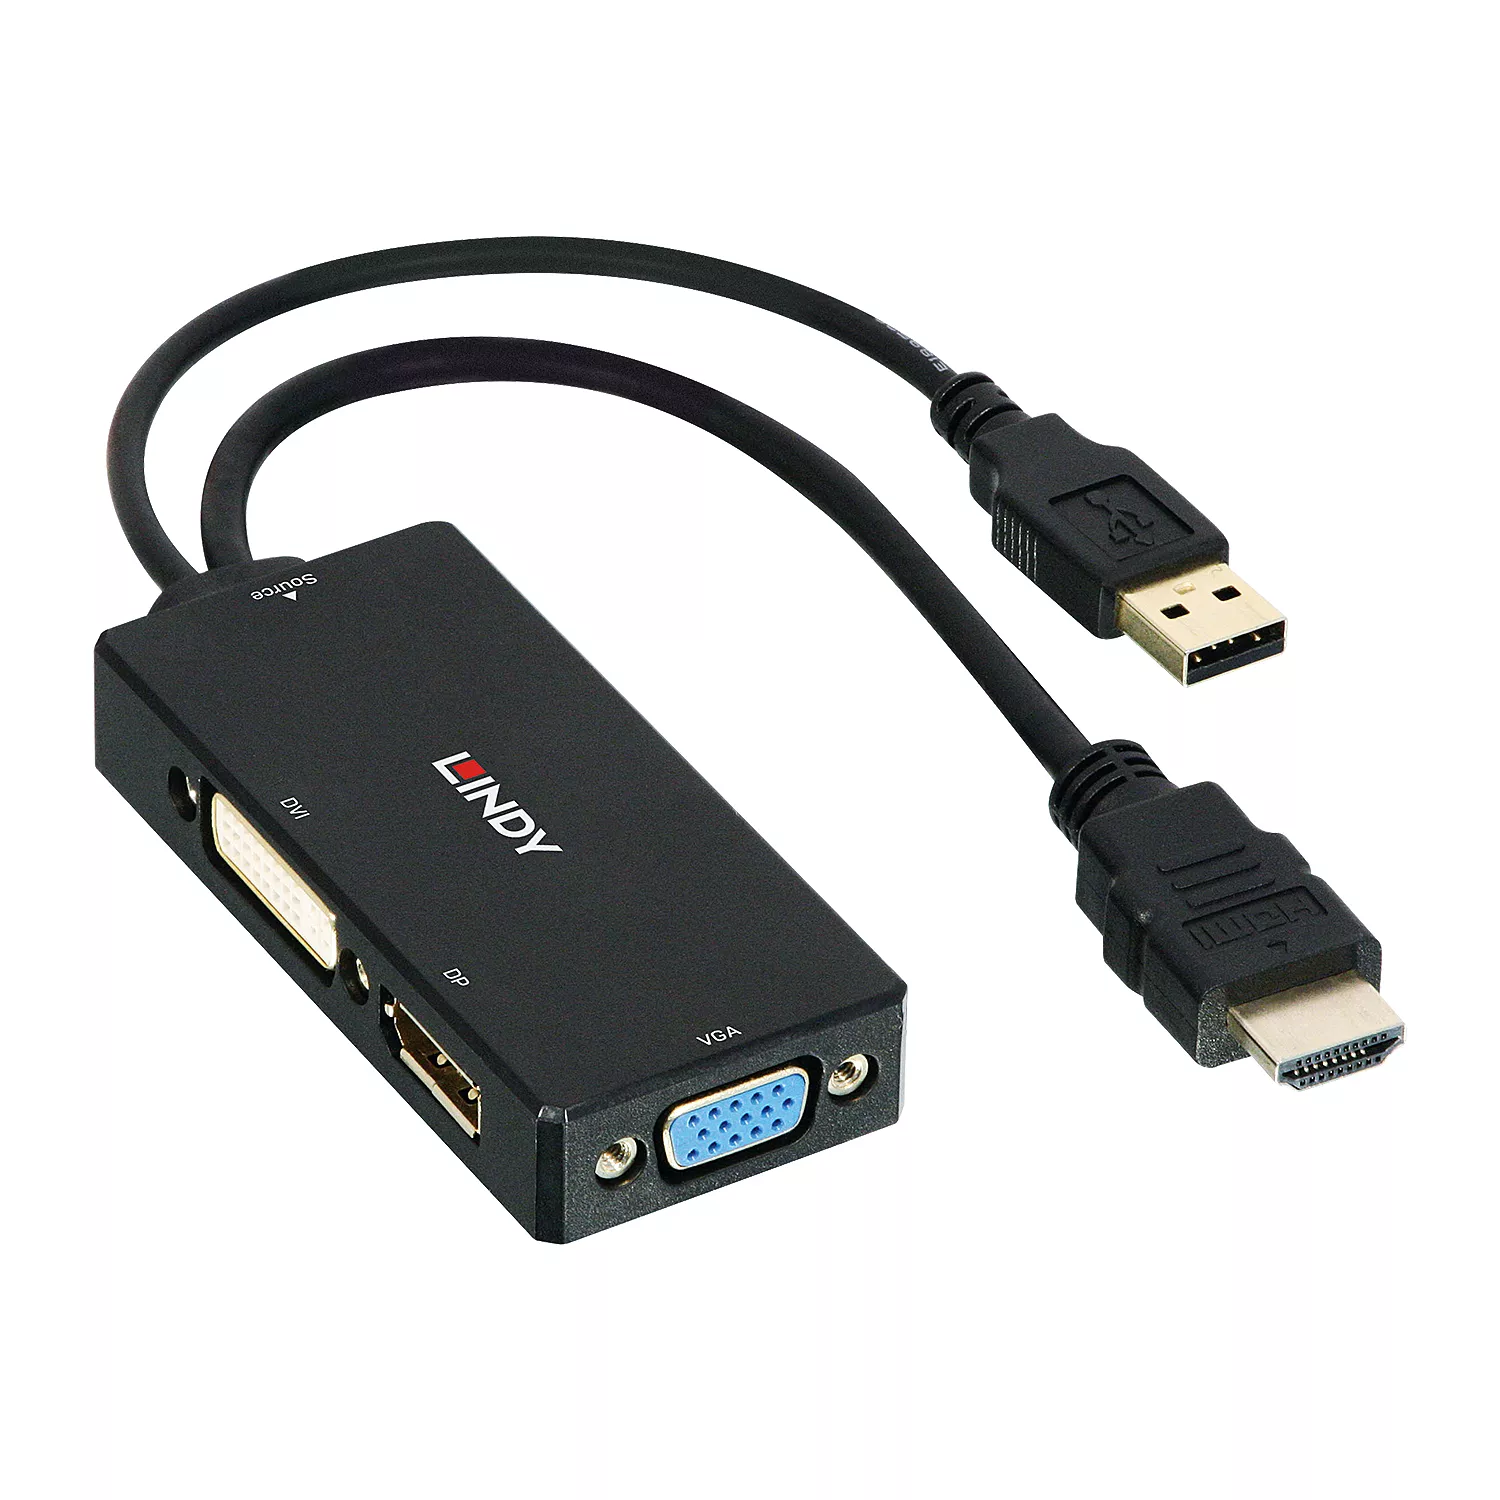 Revendeur officiel LINDY HDMI to DP/DVI/VGA Converter Supports resolutions